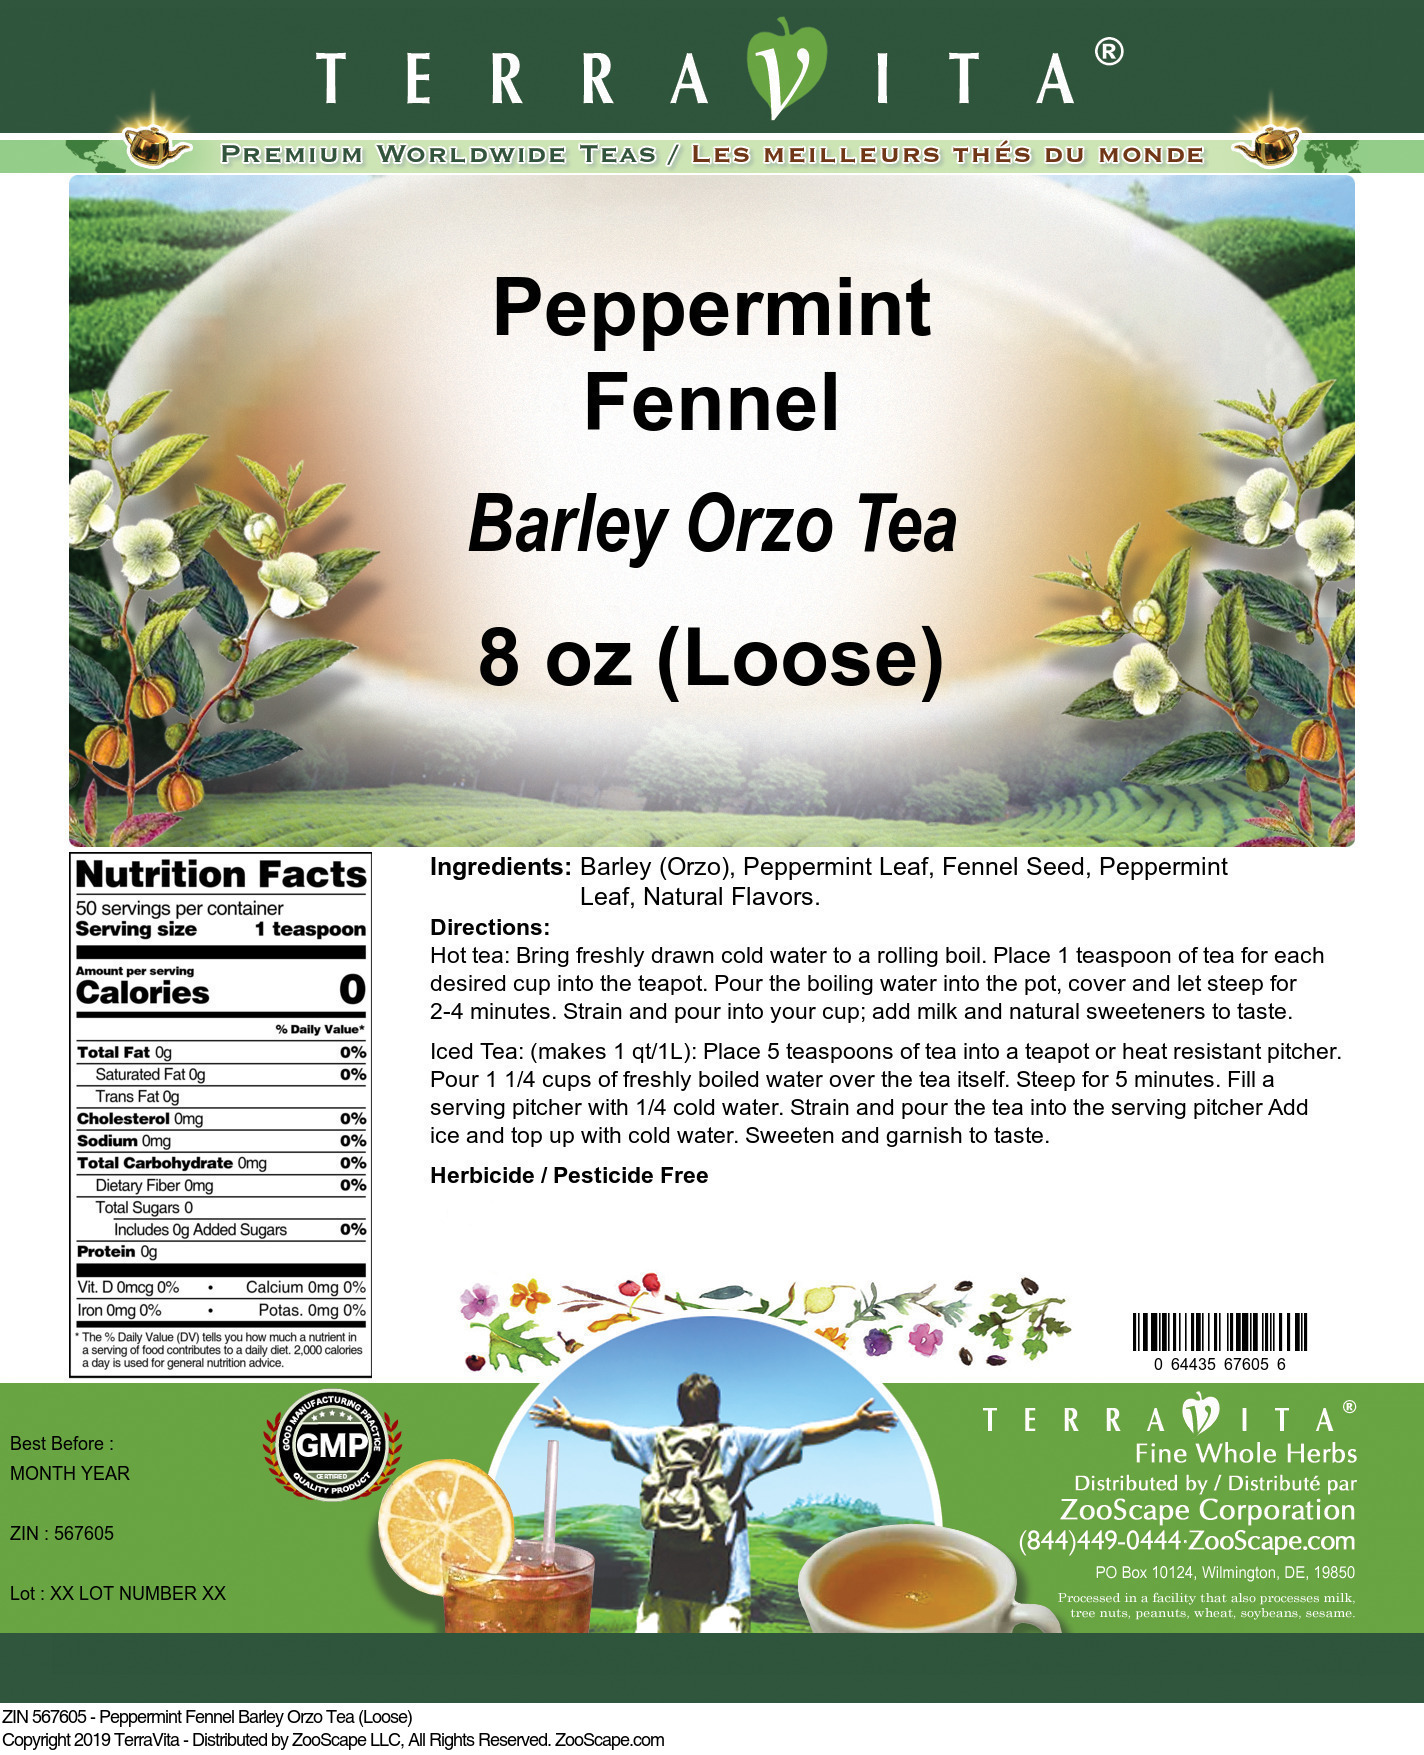 Peppermint Fennel Barley Orzo Tea (Loose) - Label